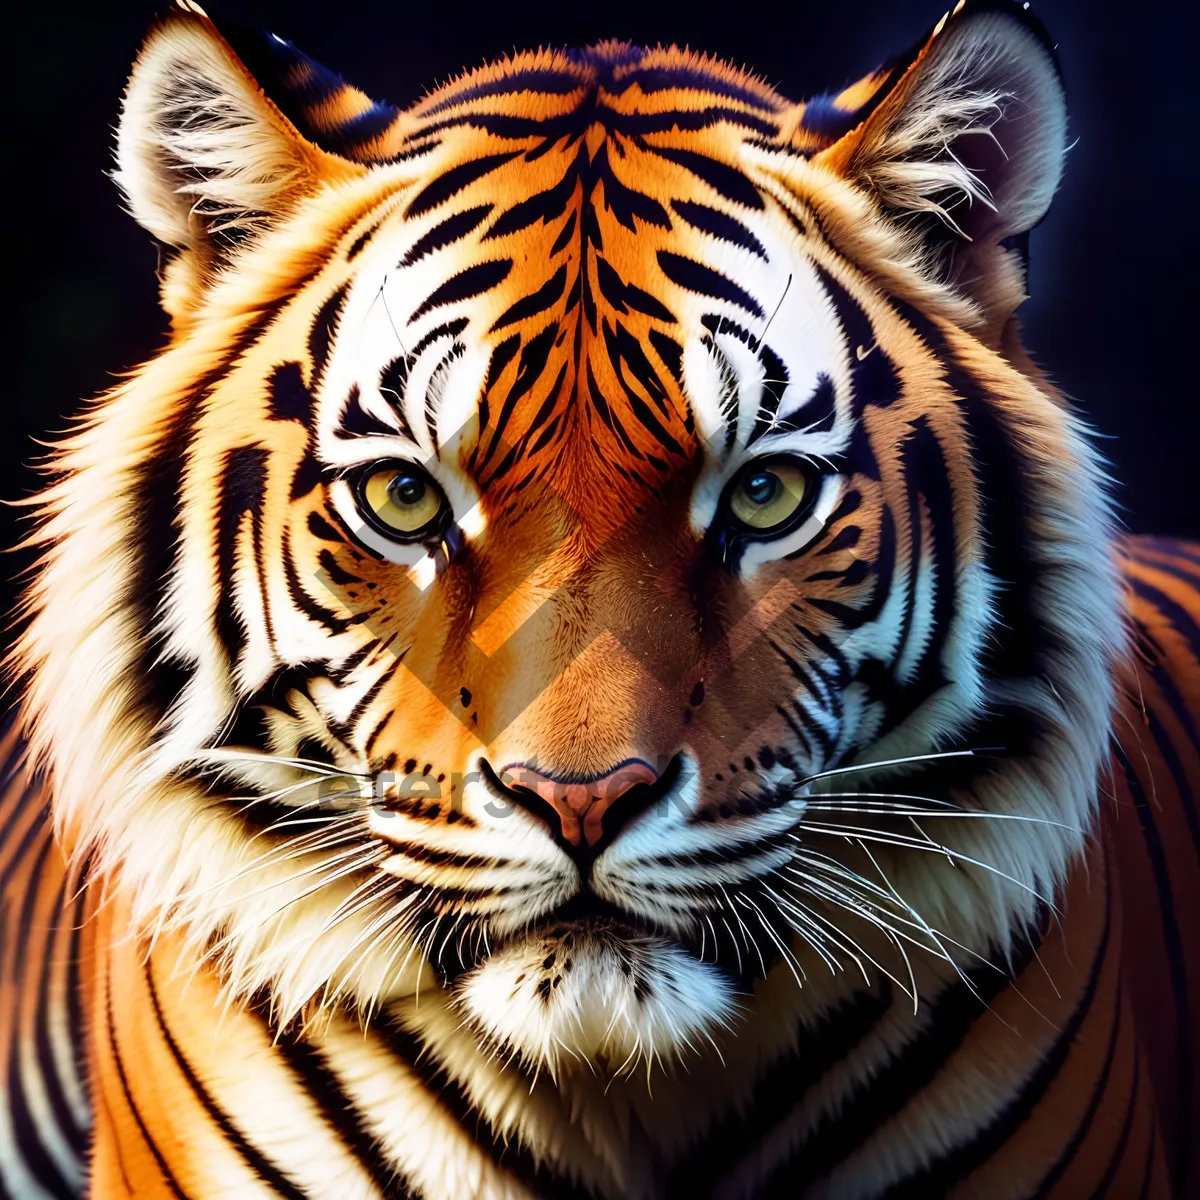 Picture of Majestic Tiger in the Wild: Fierce Striped Predator